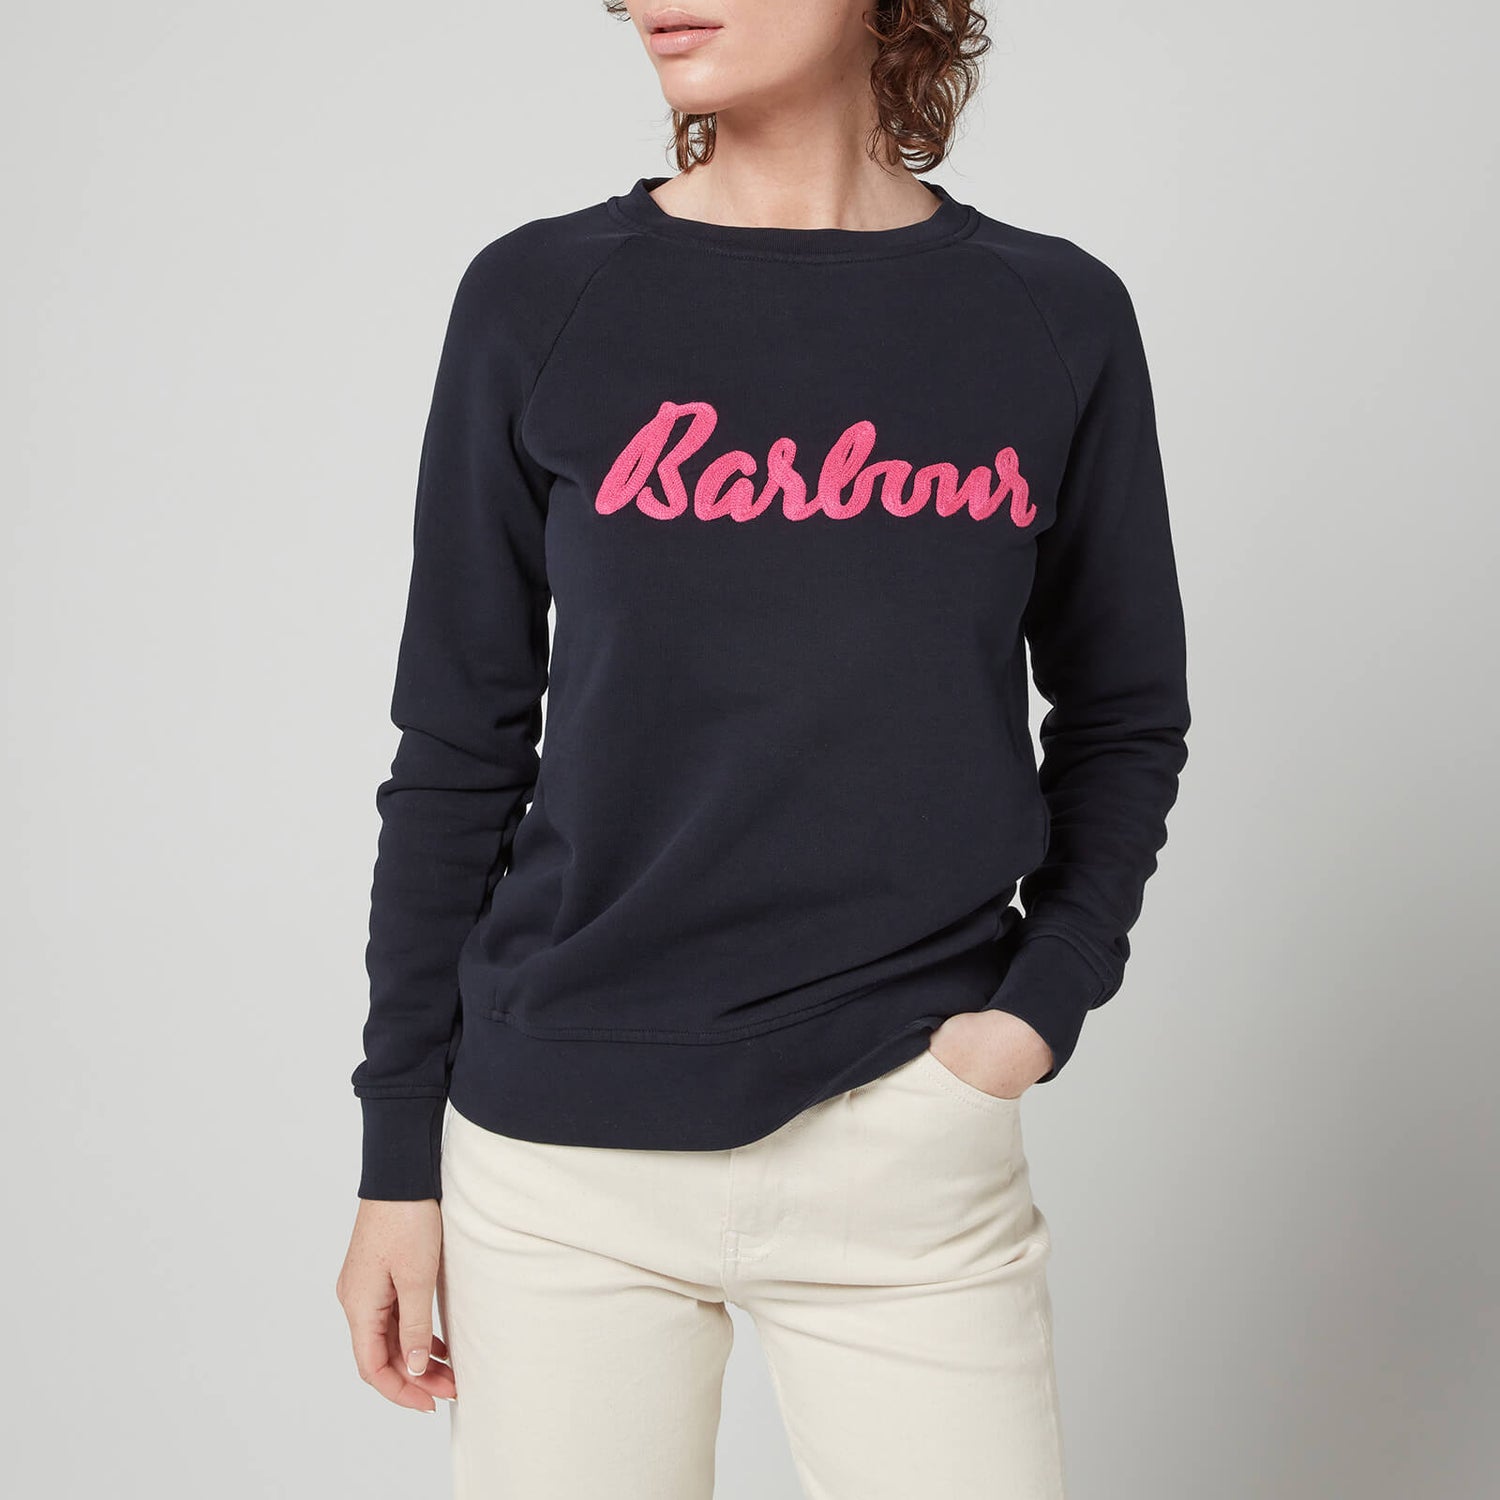 Barbour Women's Otterburn Sweatshirt - Navy/Fuchsia